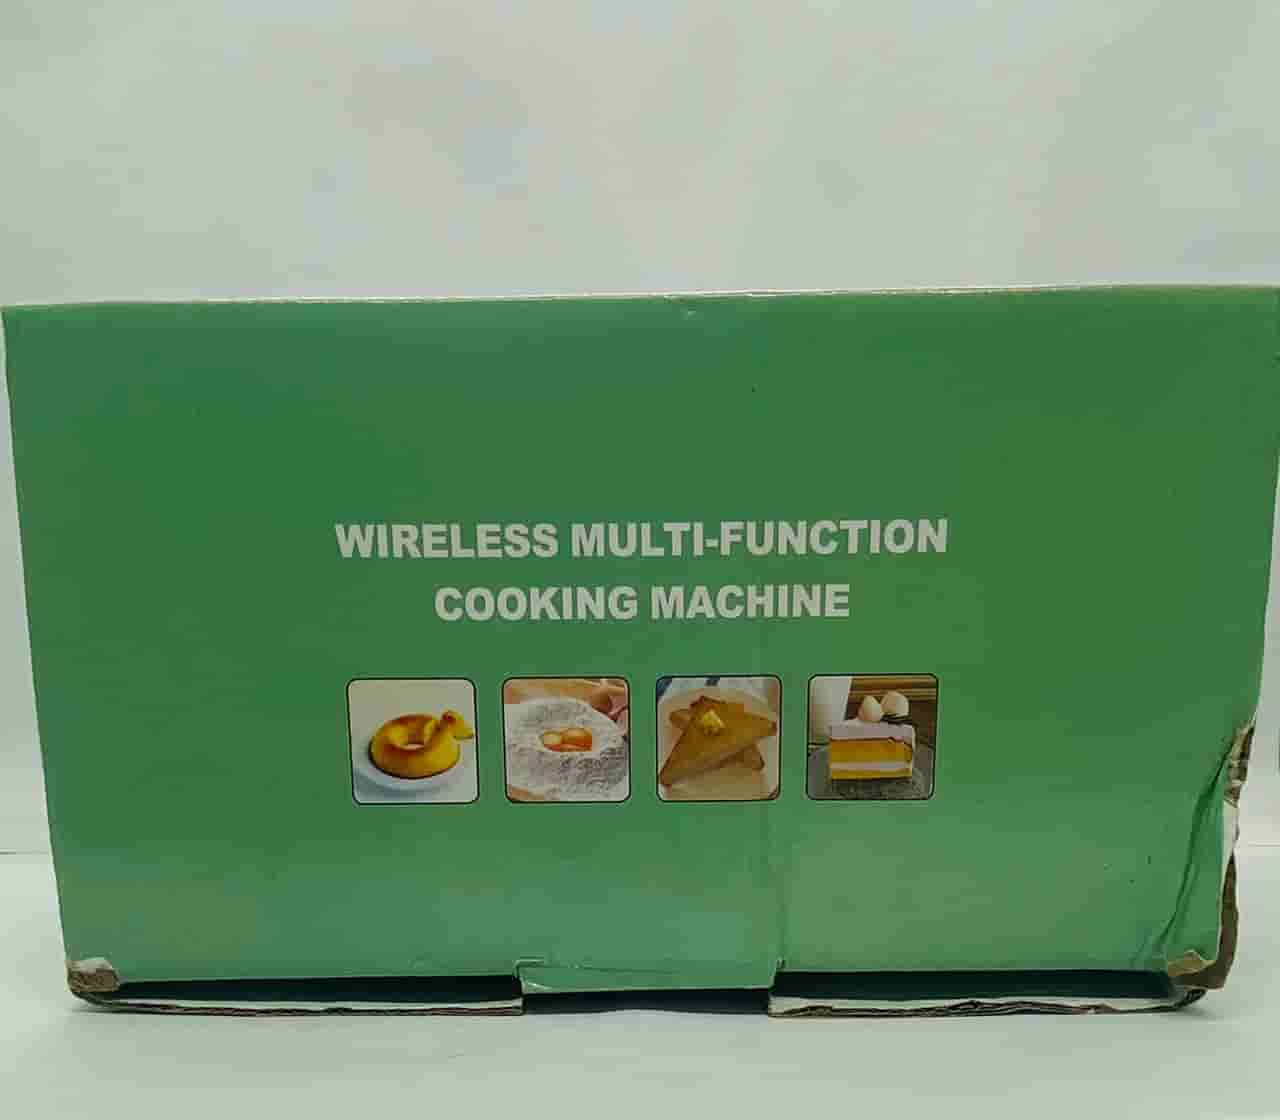 Wireless multi-function cooking machine